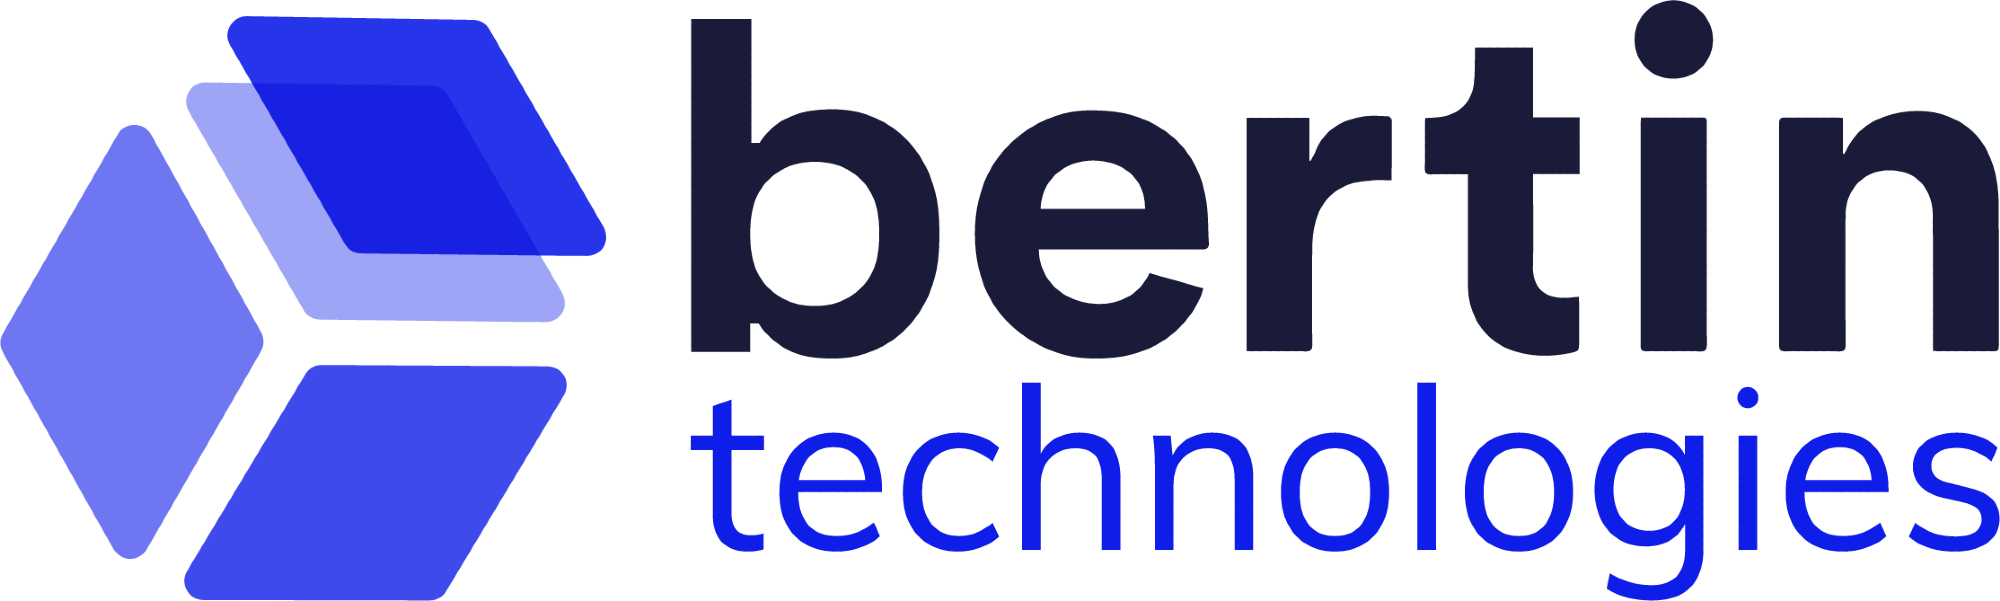 Bertin Technologies logo.